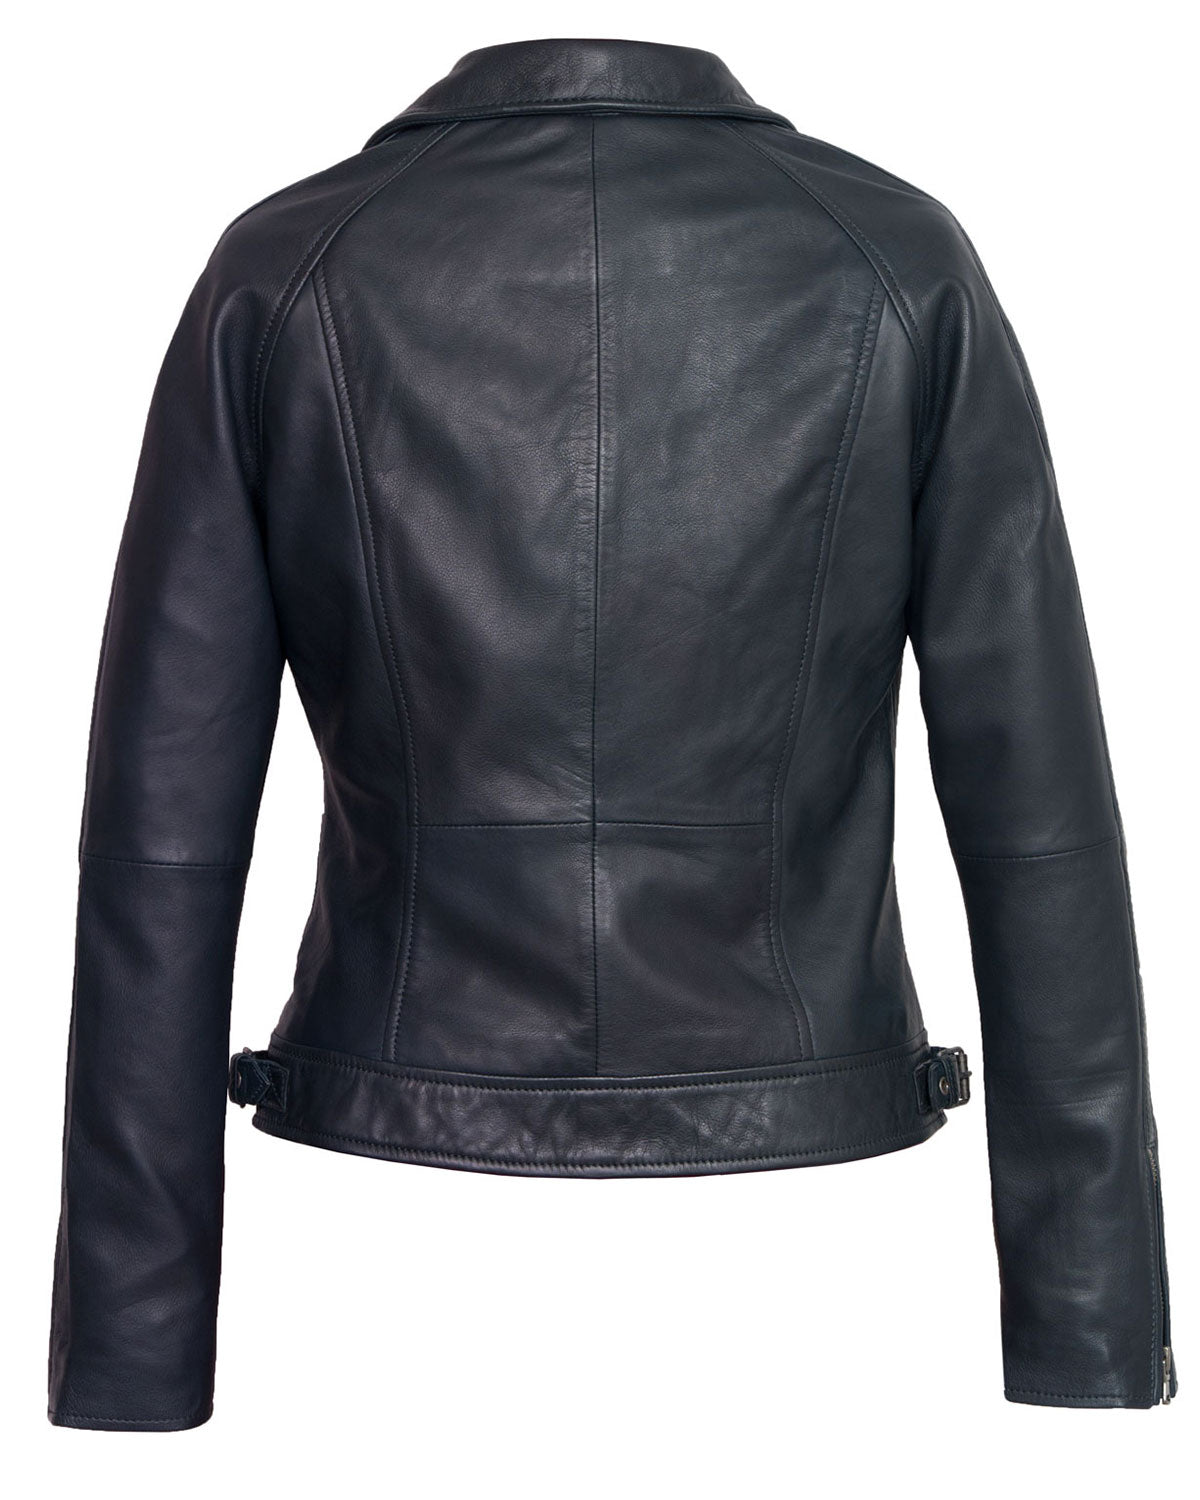 Elite Women’s Navy Leather Jacket